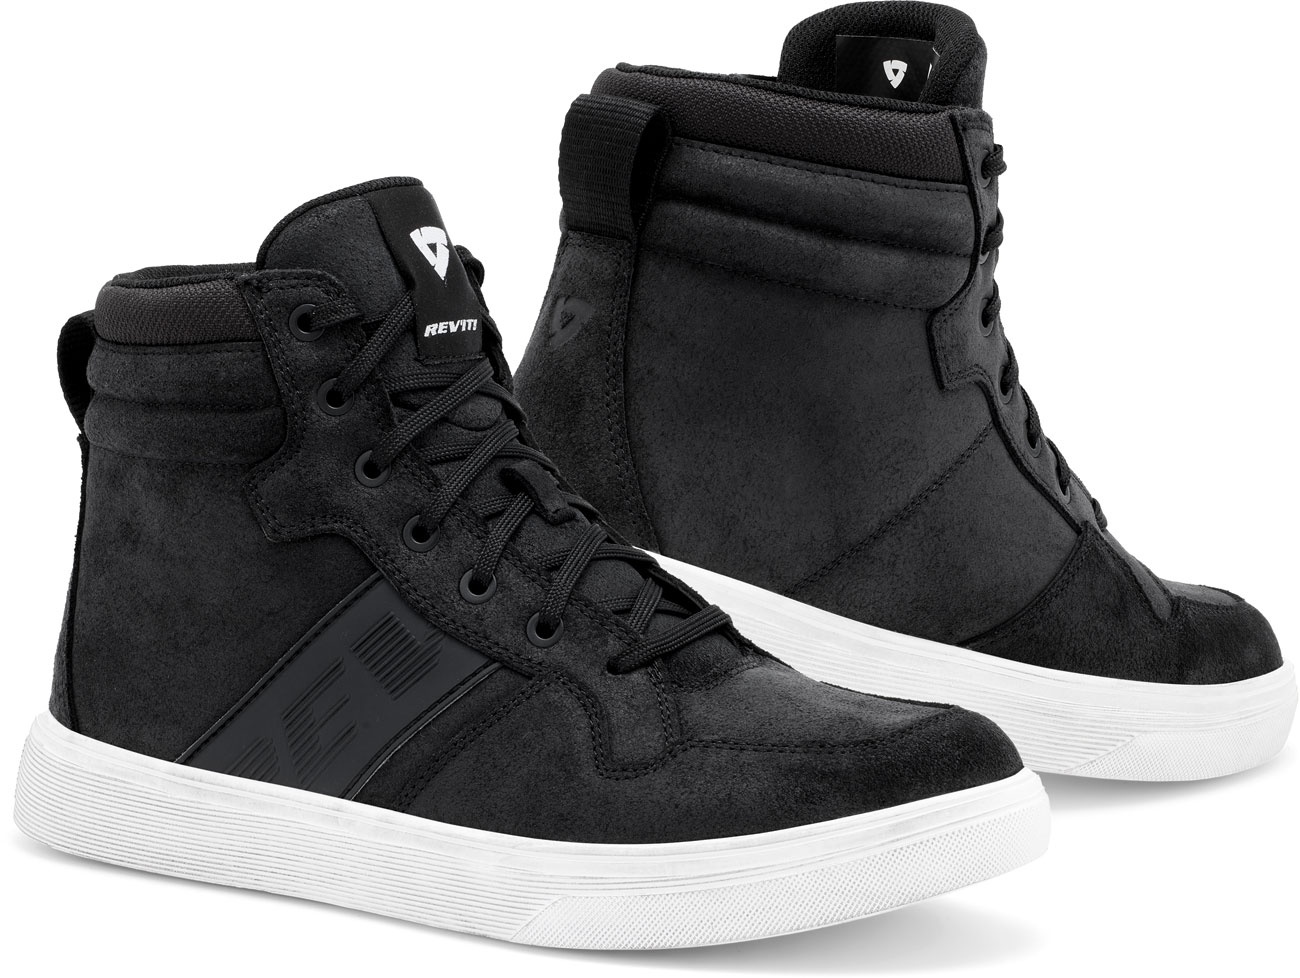 Revit Kick, chaussures - Noir/Blanc - 42 EU